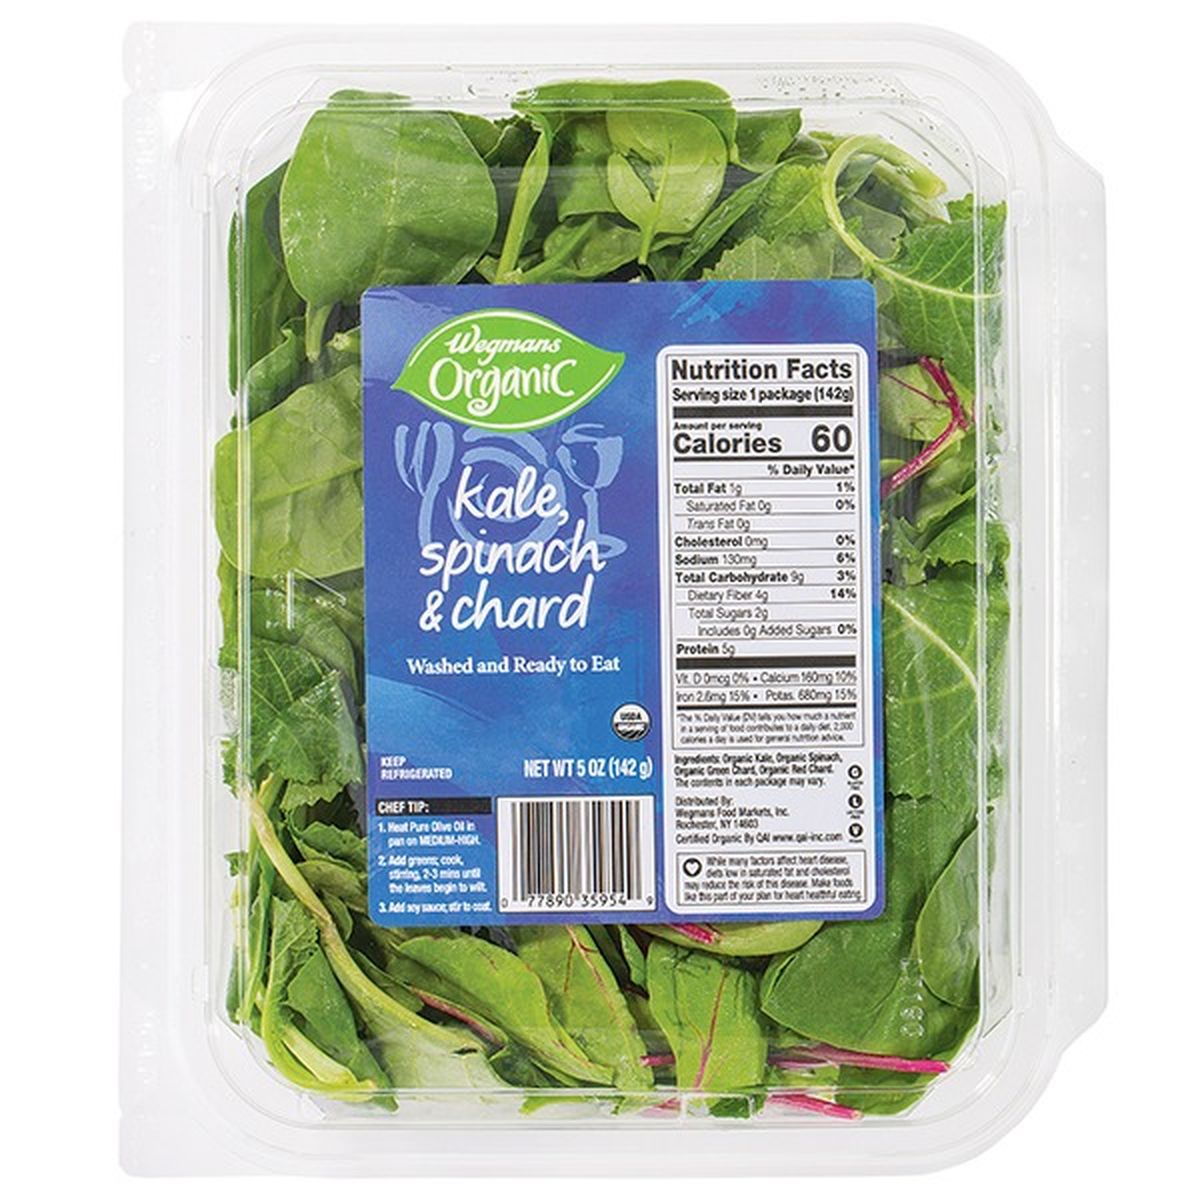 Calories in Wegmans Organic Kale, Spinach & Chard